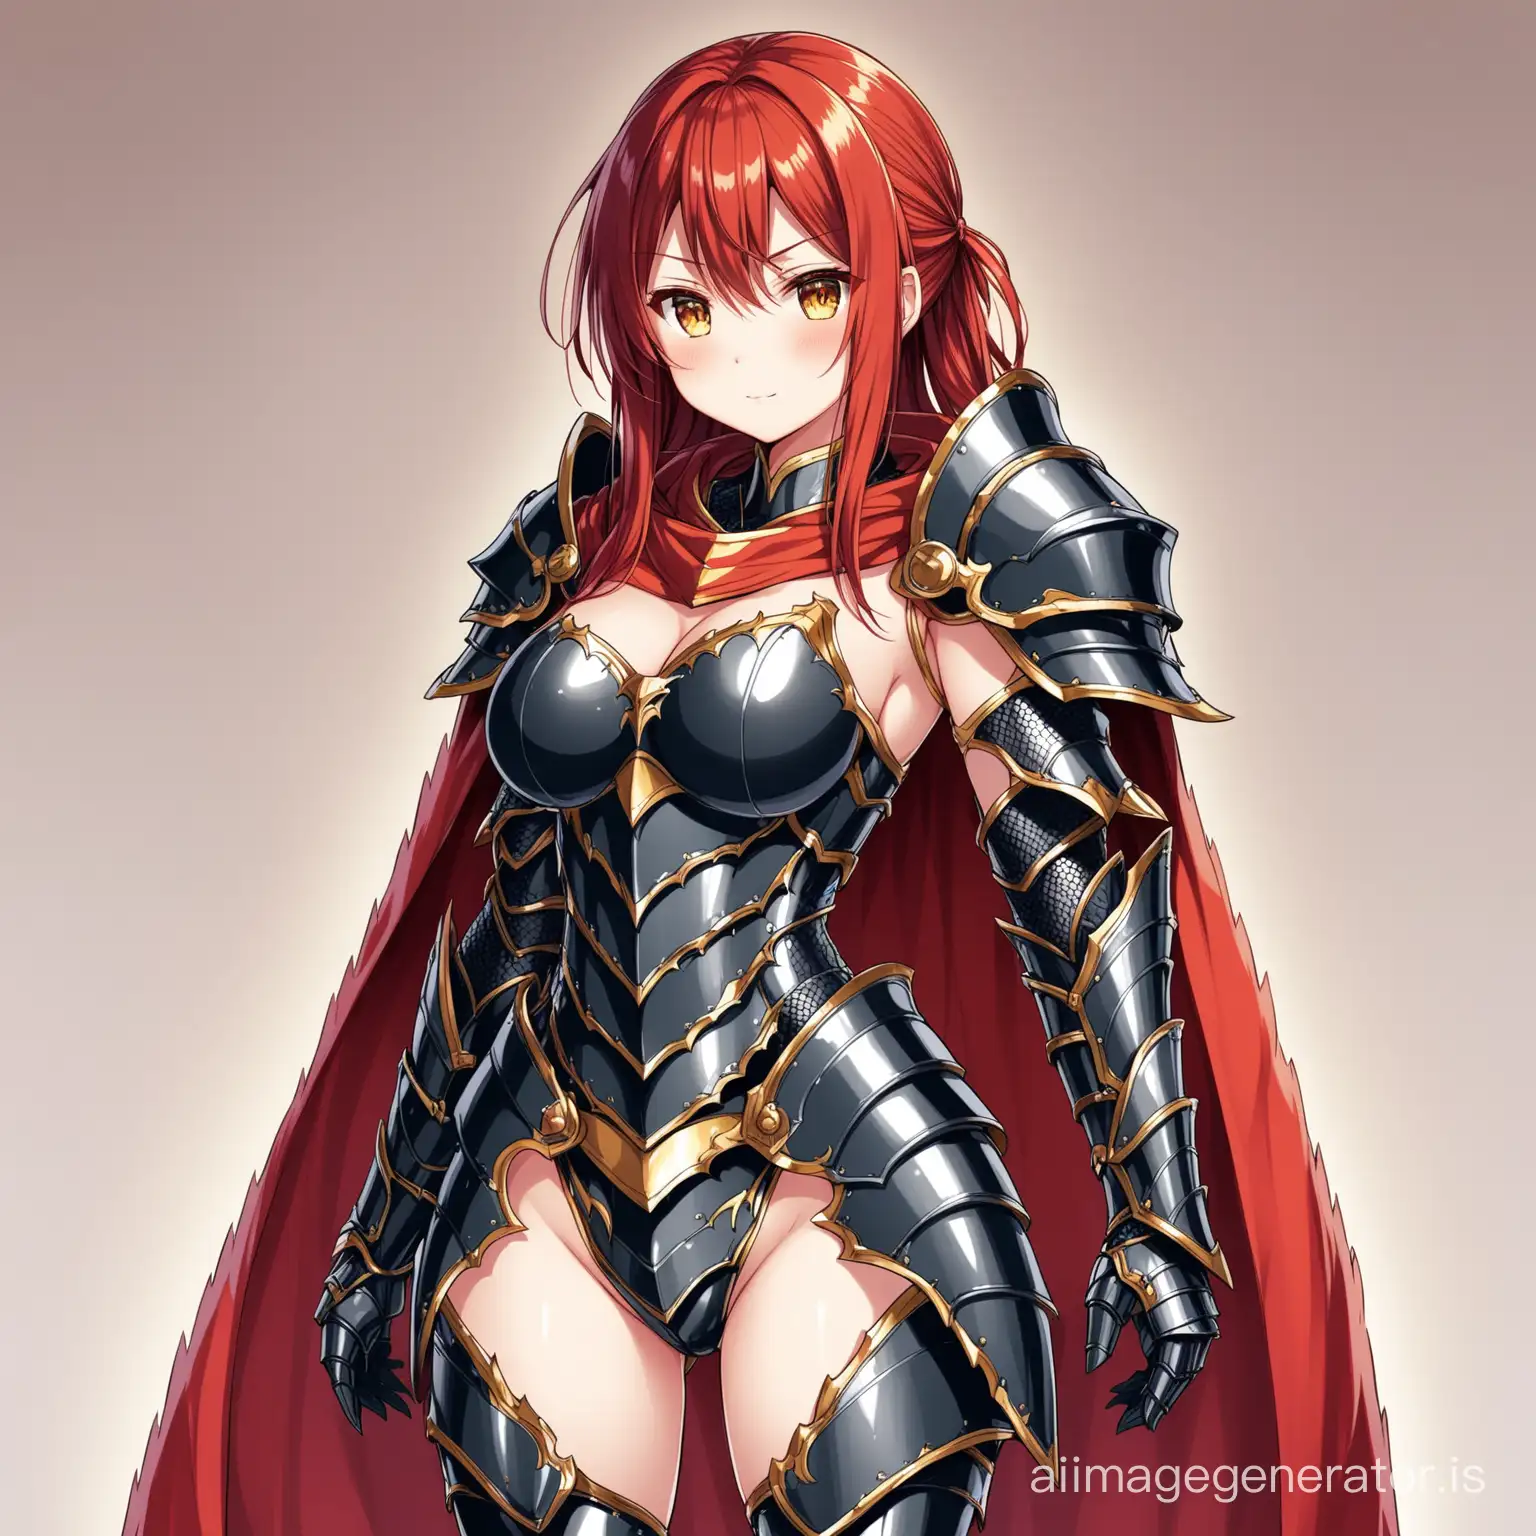 Anime-Girl-in-Dragon-Armor-Costume-with-Elegant-Cape